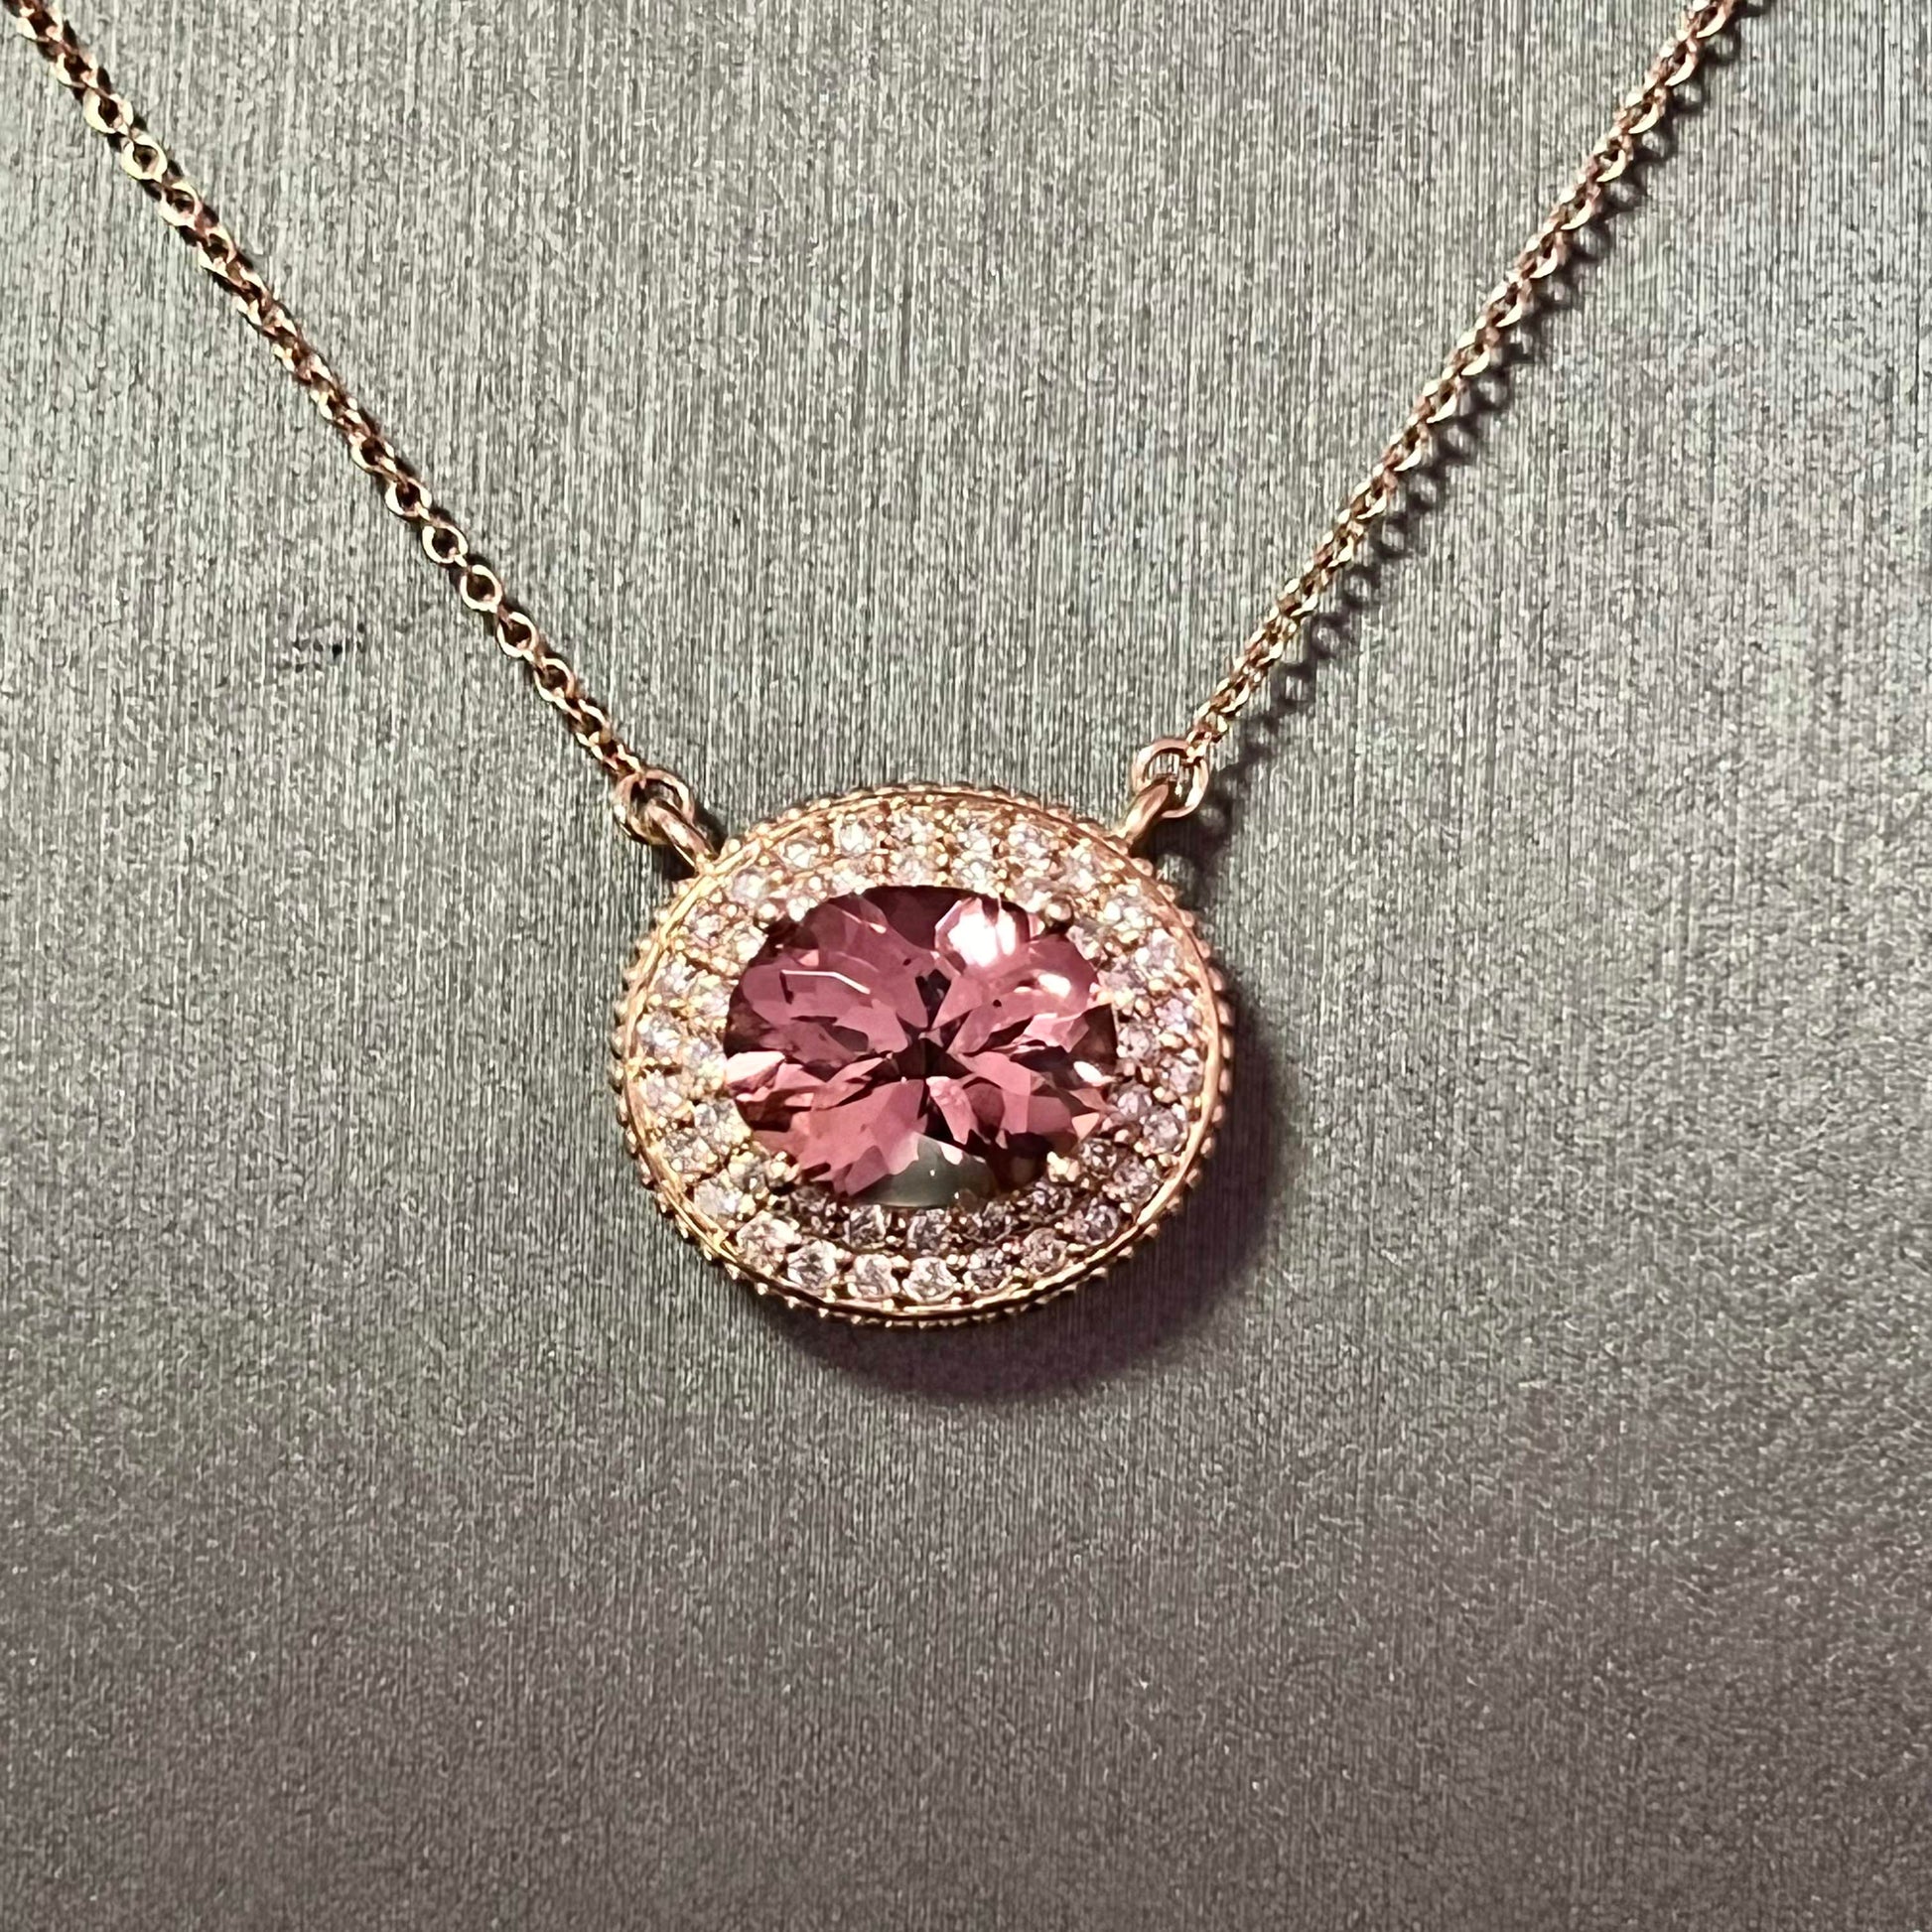 Natural Tourmaline Diamond Necklace 18" 14k Gold 5.0 TCW Certified $7,950 121441 - Certified Estate Jewelry